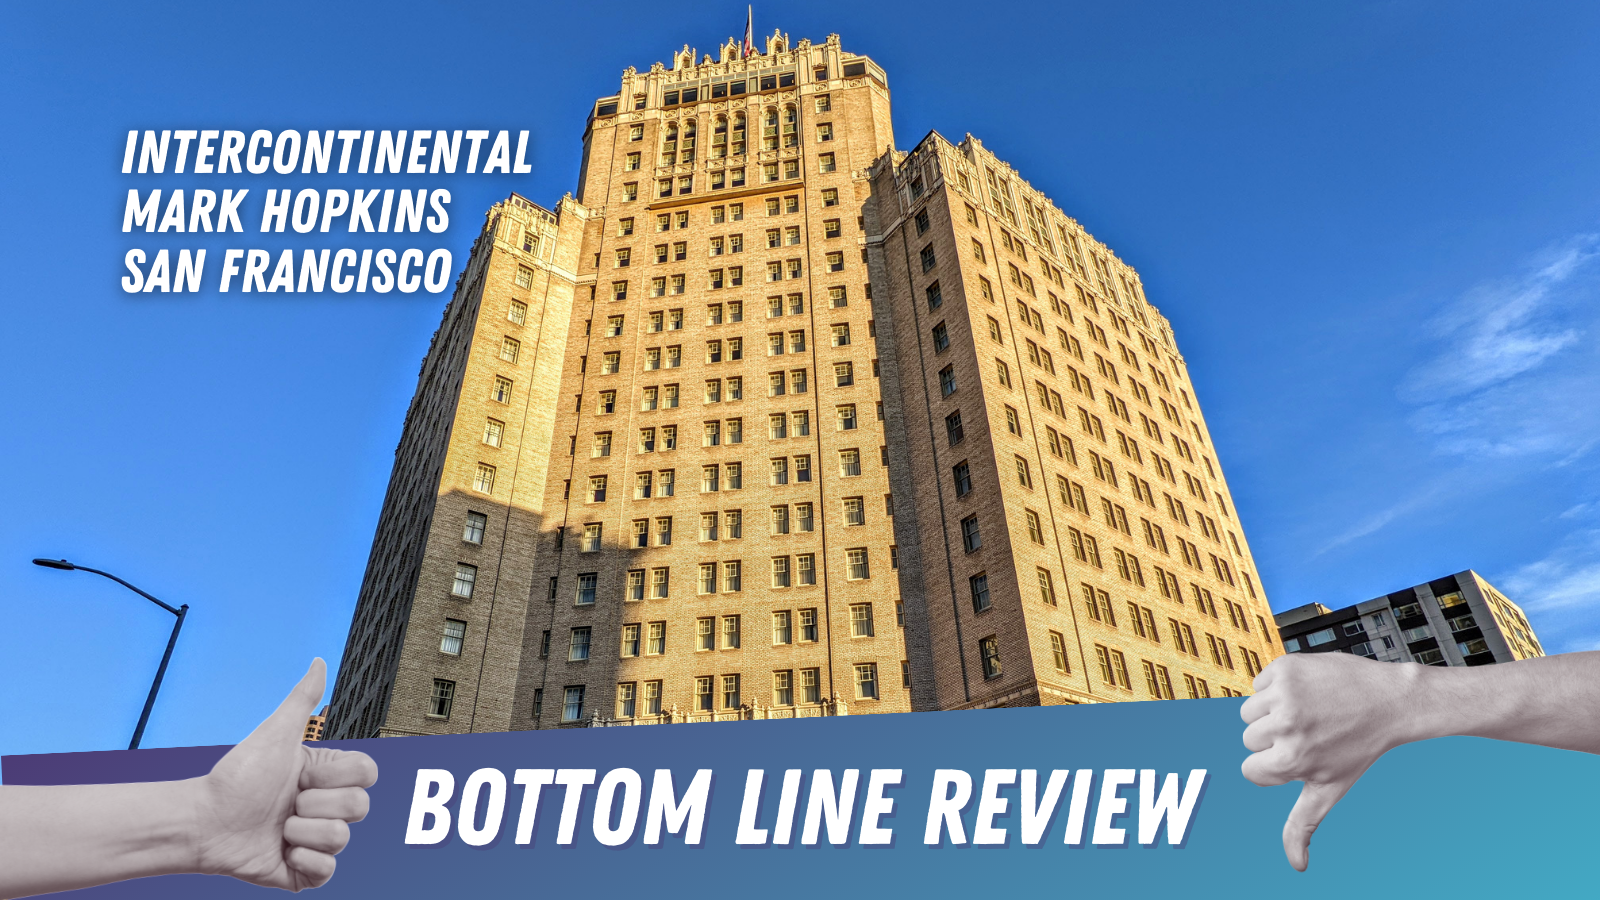 InterContinental Mark Hopkins San Francisco: Bottom Line Review